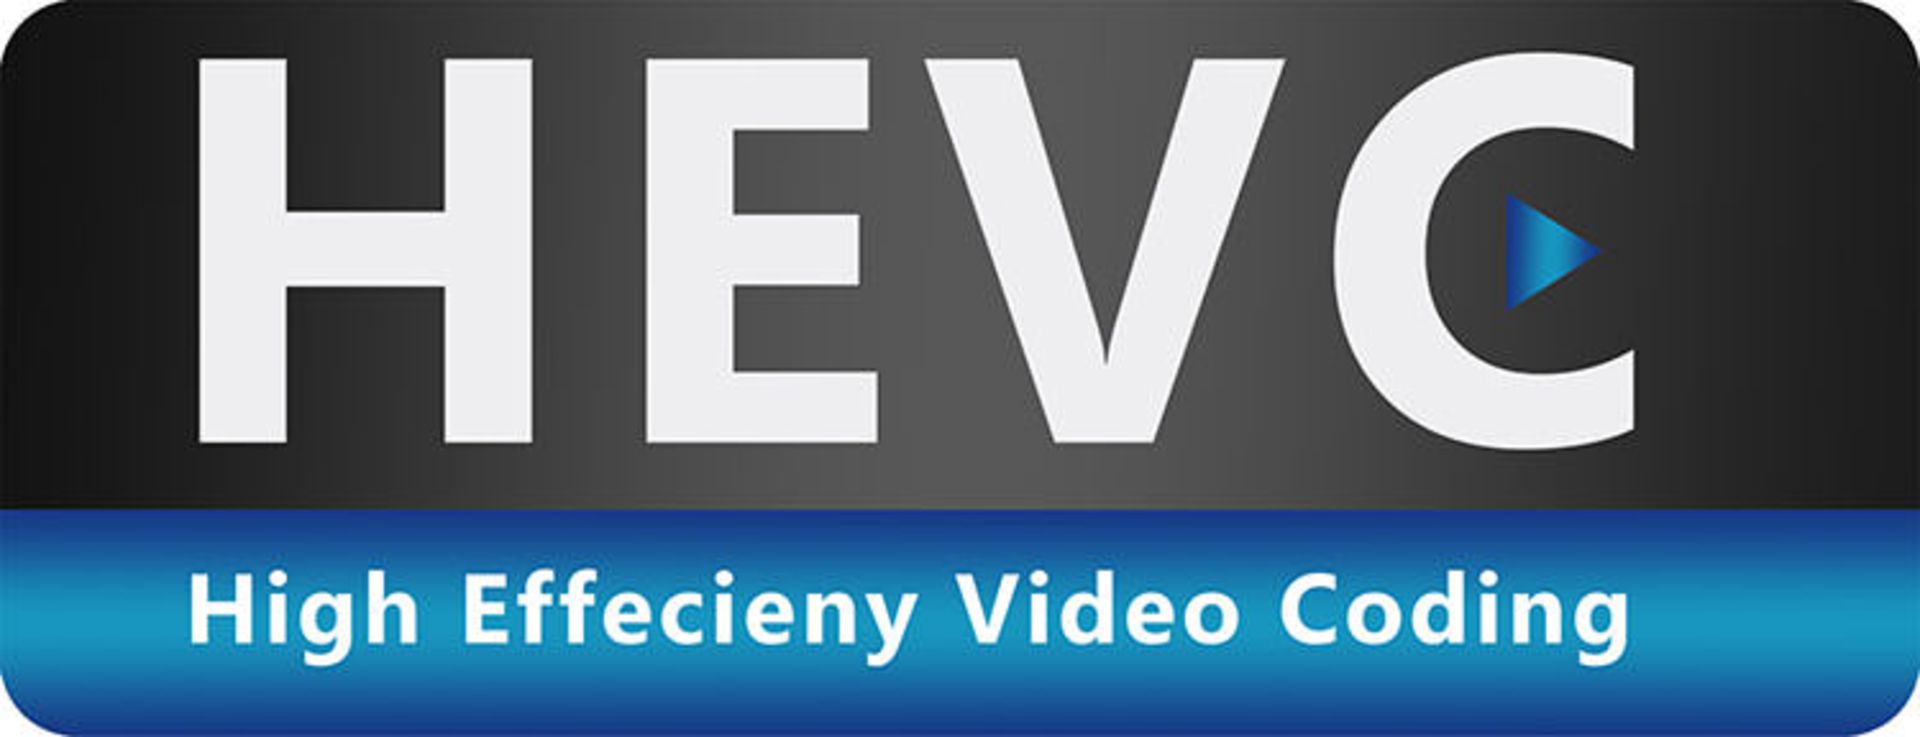 HEVC high efficiency video coding